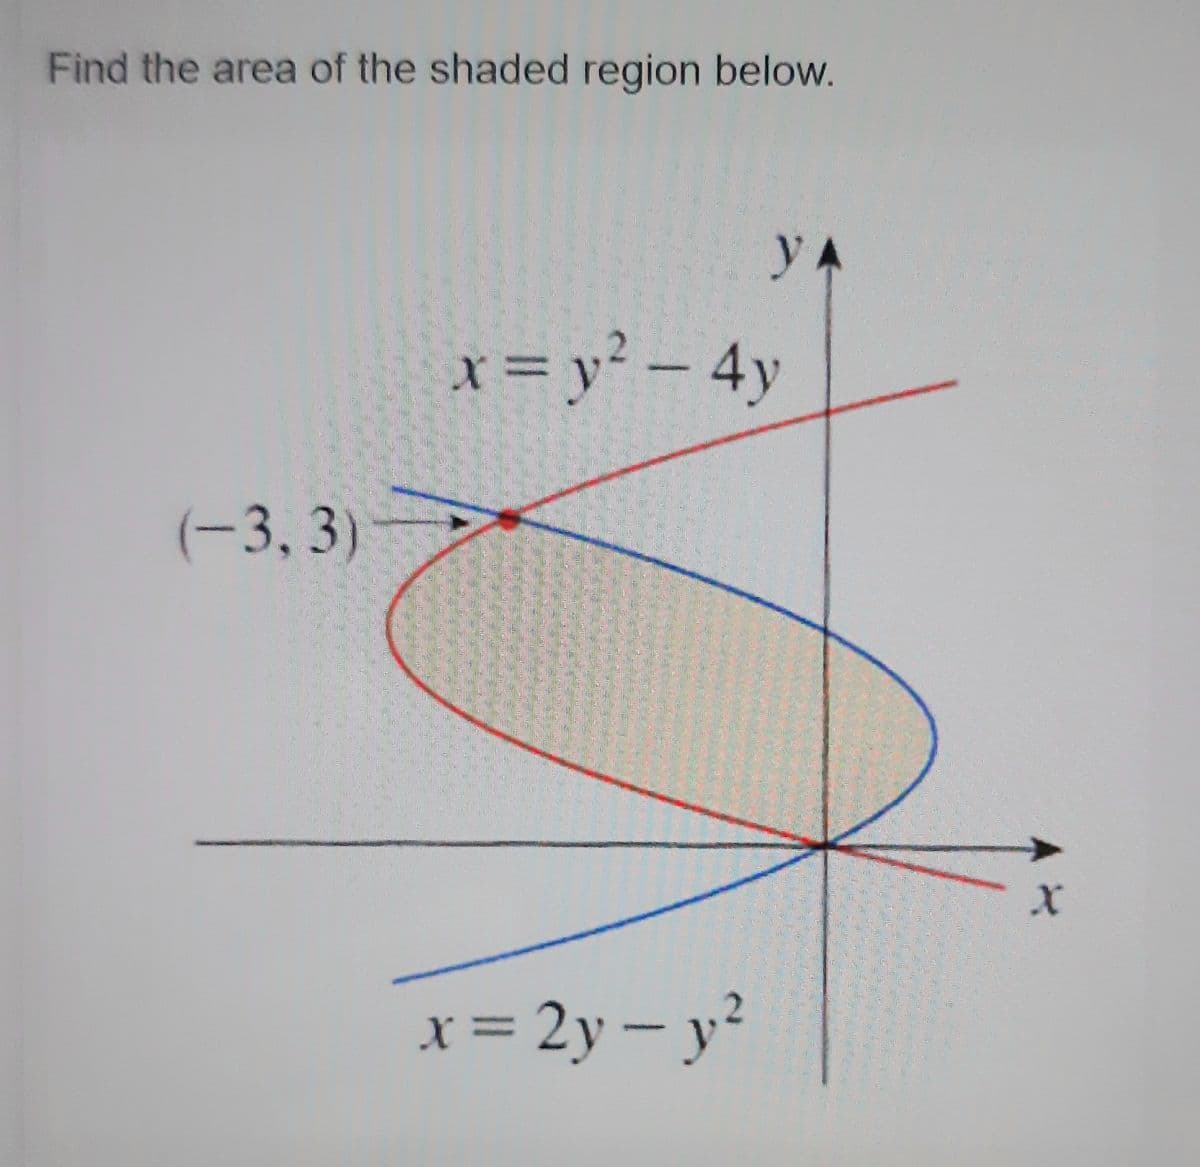 Find the area of the shaded region below.
y A
x= y'-4y
(-3,3)
x = 2y – y?
